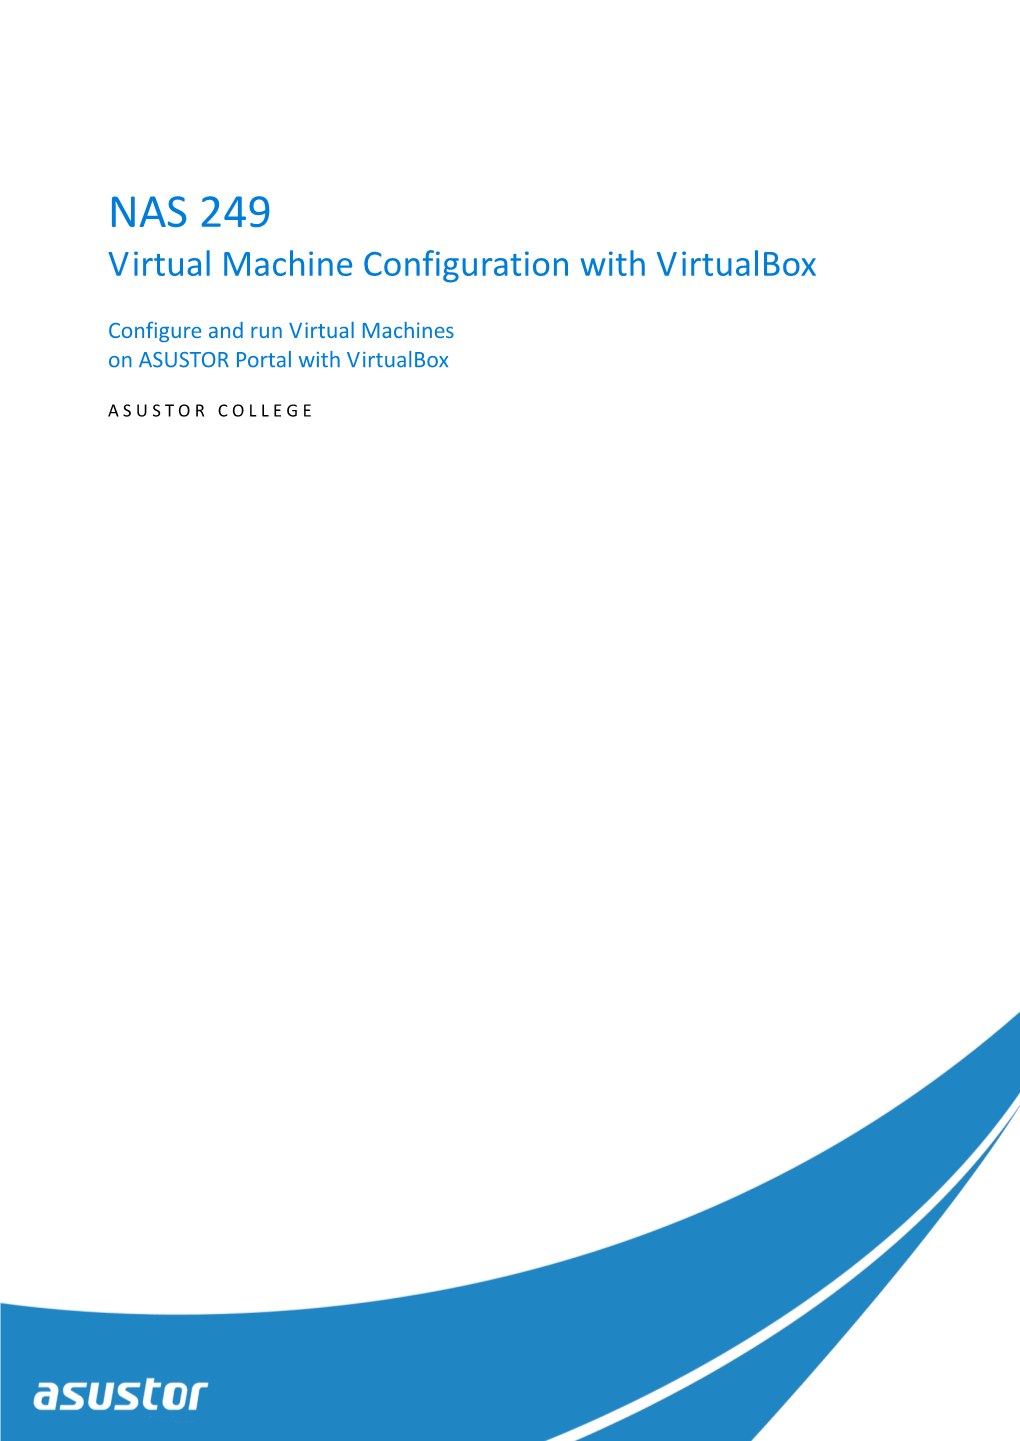 NAS 249 Virtual Machine Configuration with Virtualbox